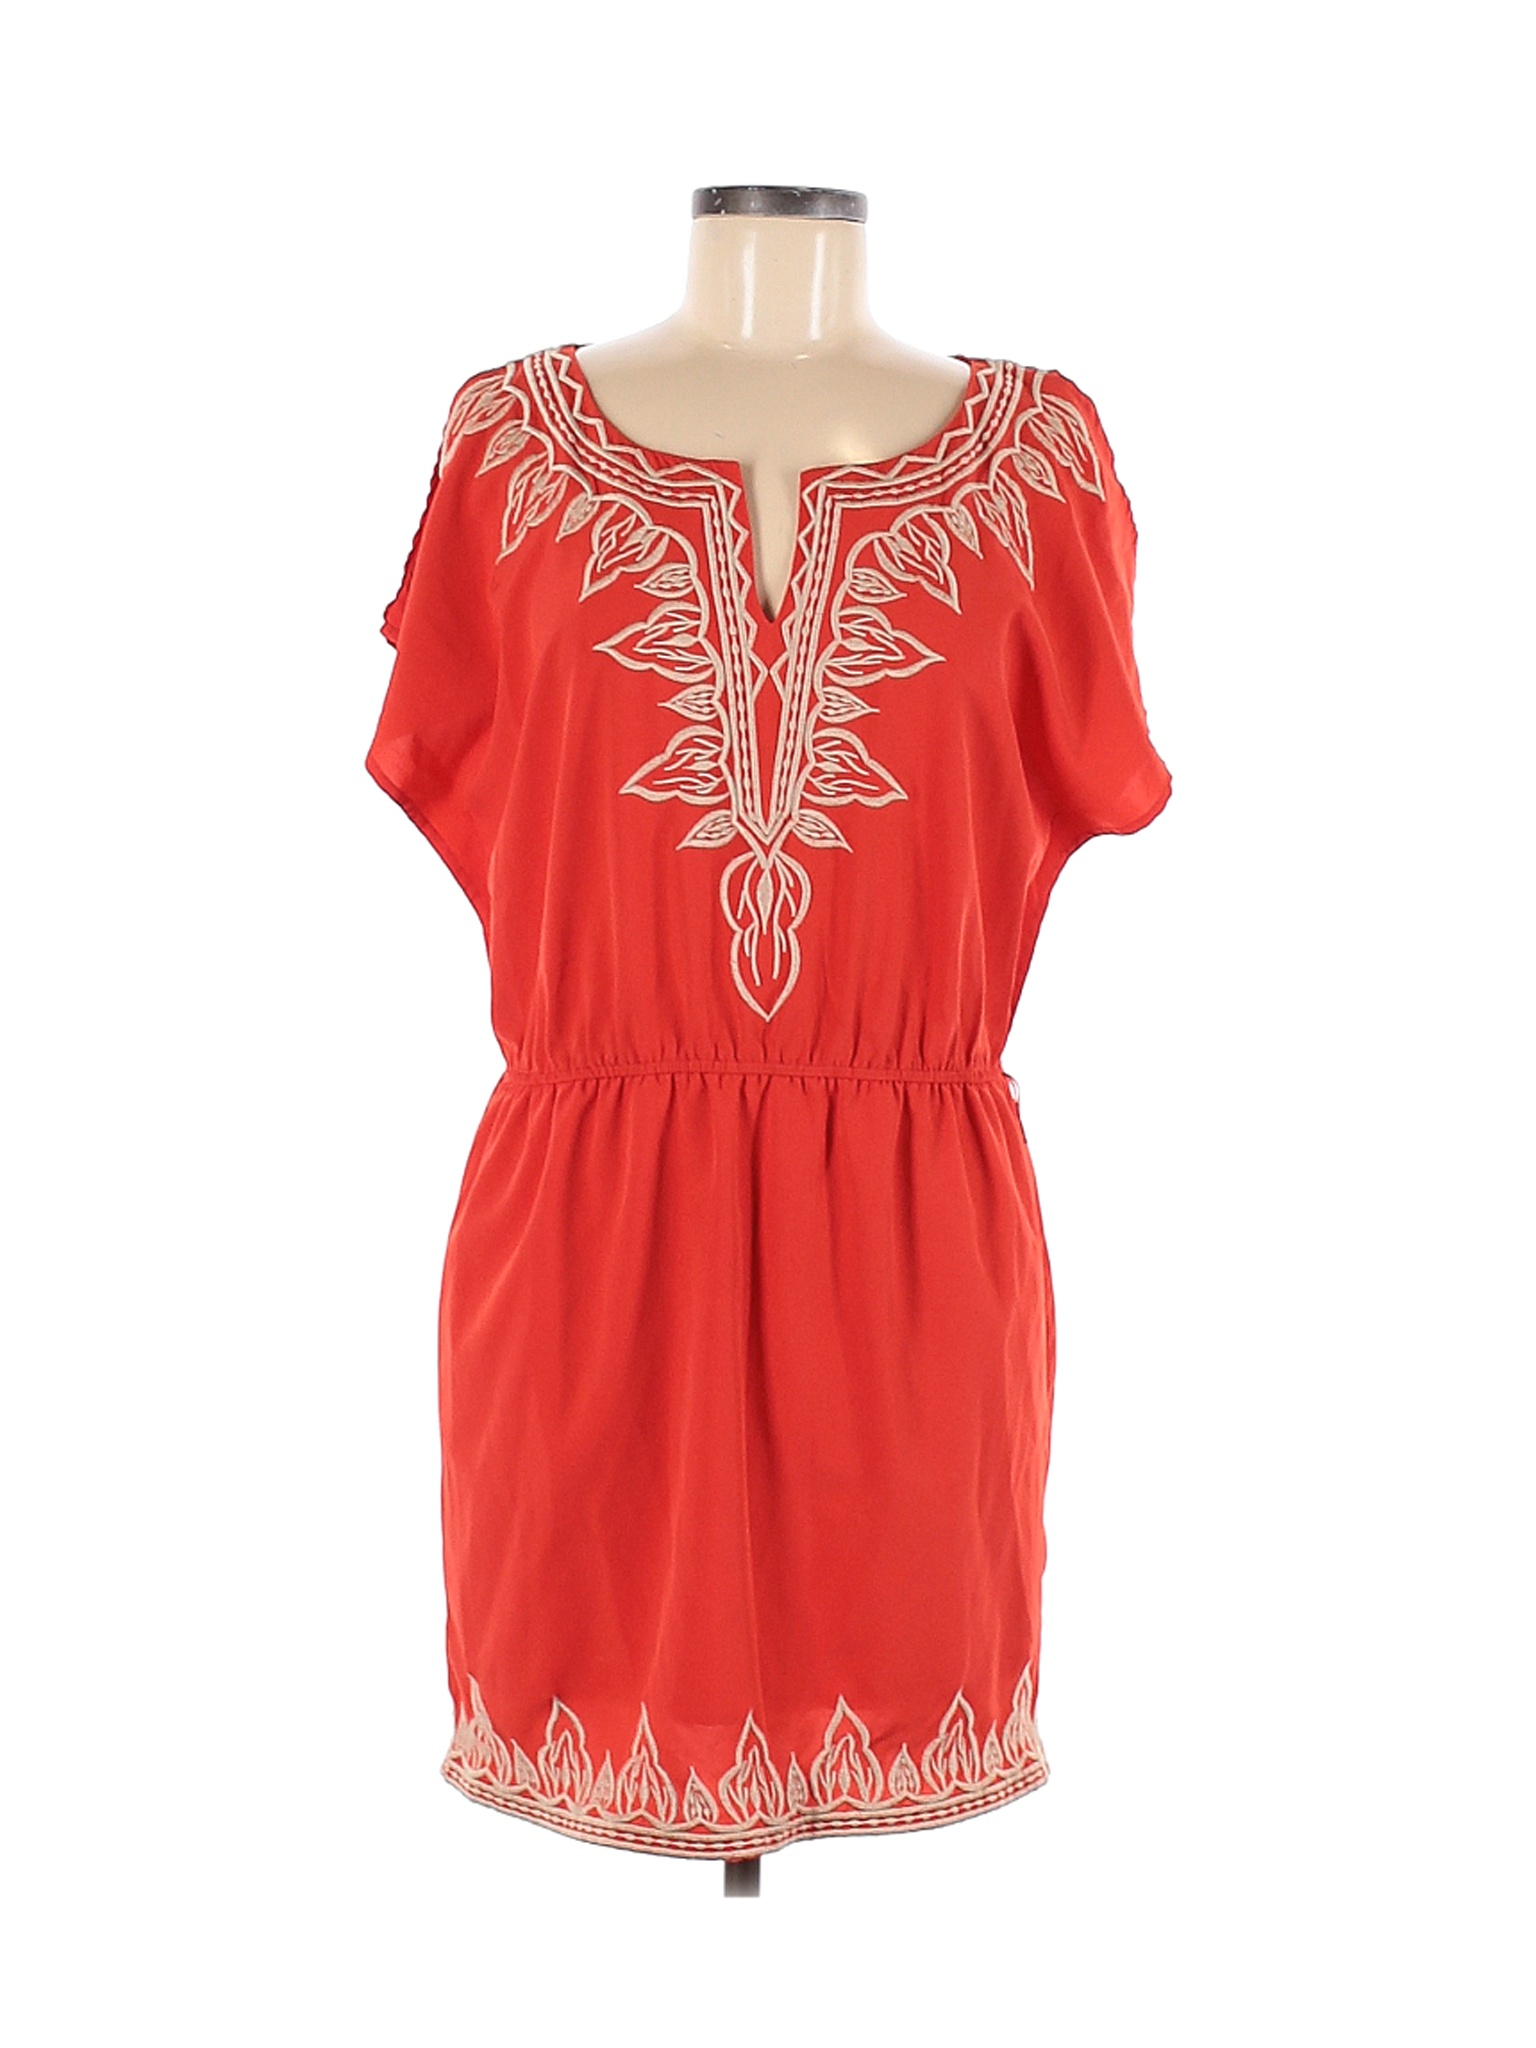 C. Luce Women Red Casual Dress M | eBay